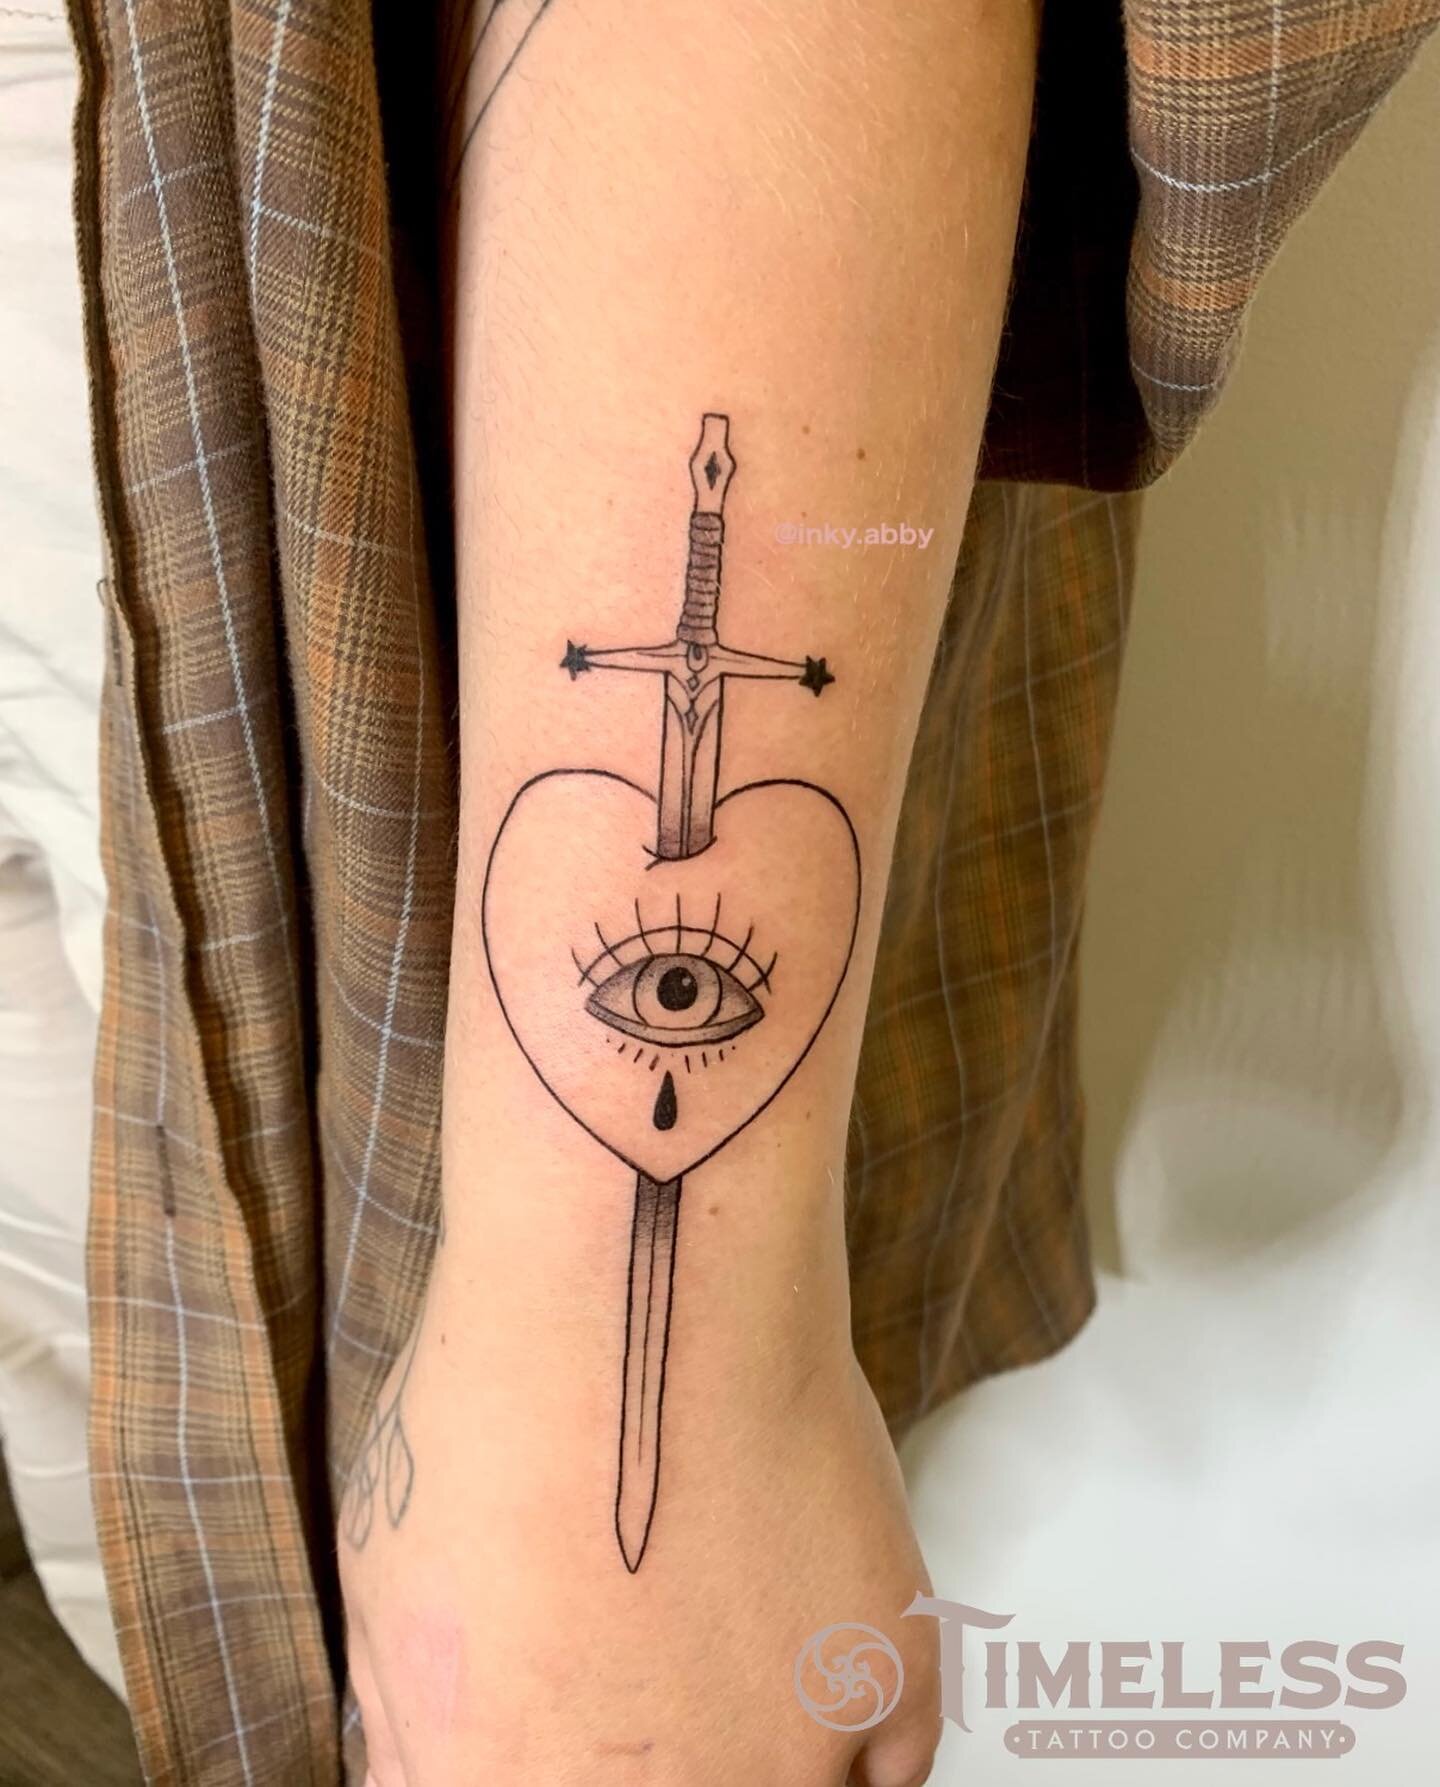 Sword piece for @chloexella_ 🤍
&bull;
@timeless_tattoo_company 
#durhamtattoo #swordtattoo #whitbytattoos #torontotattoo